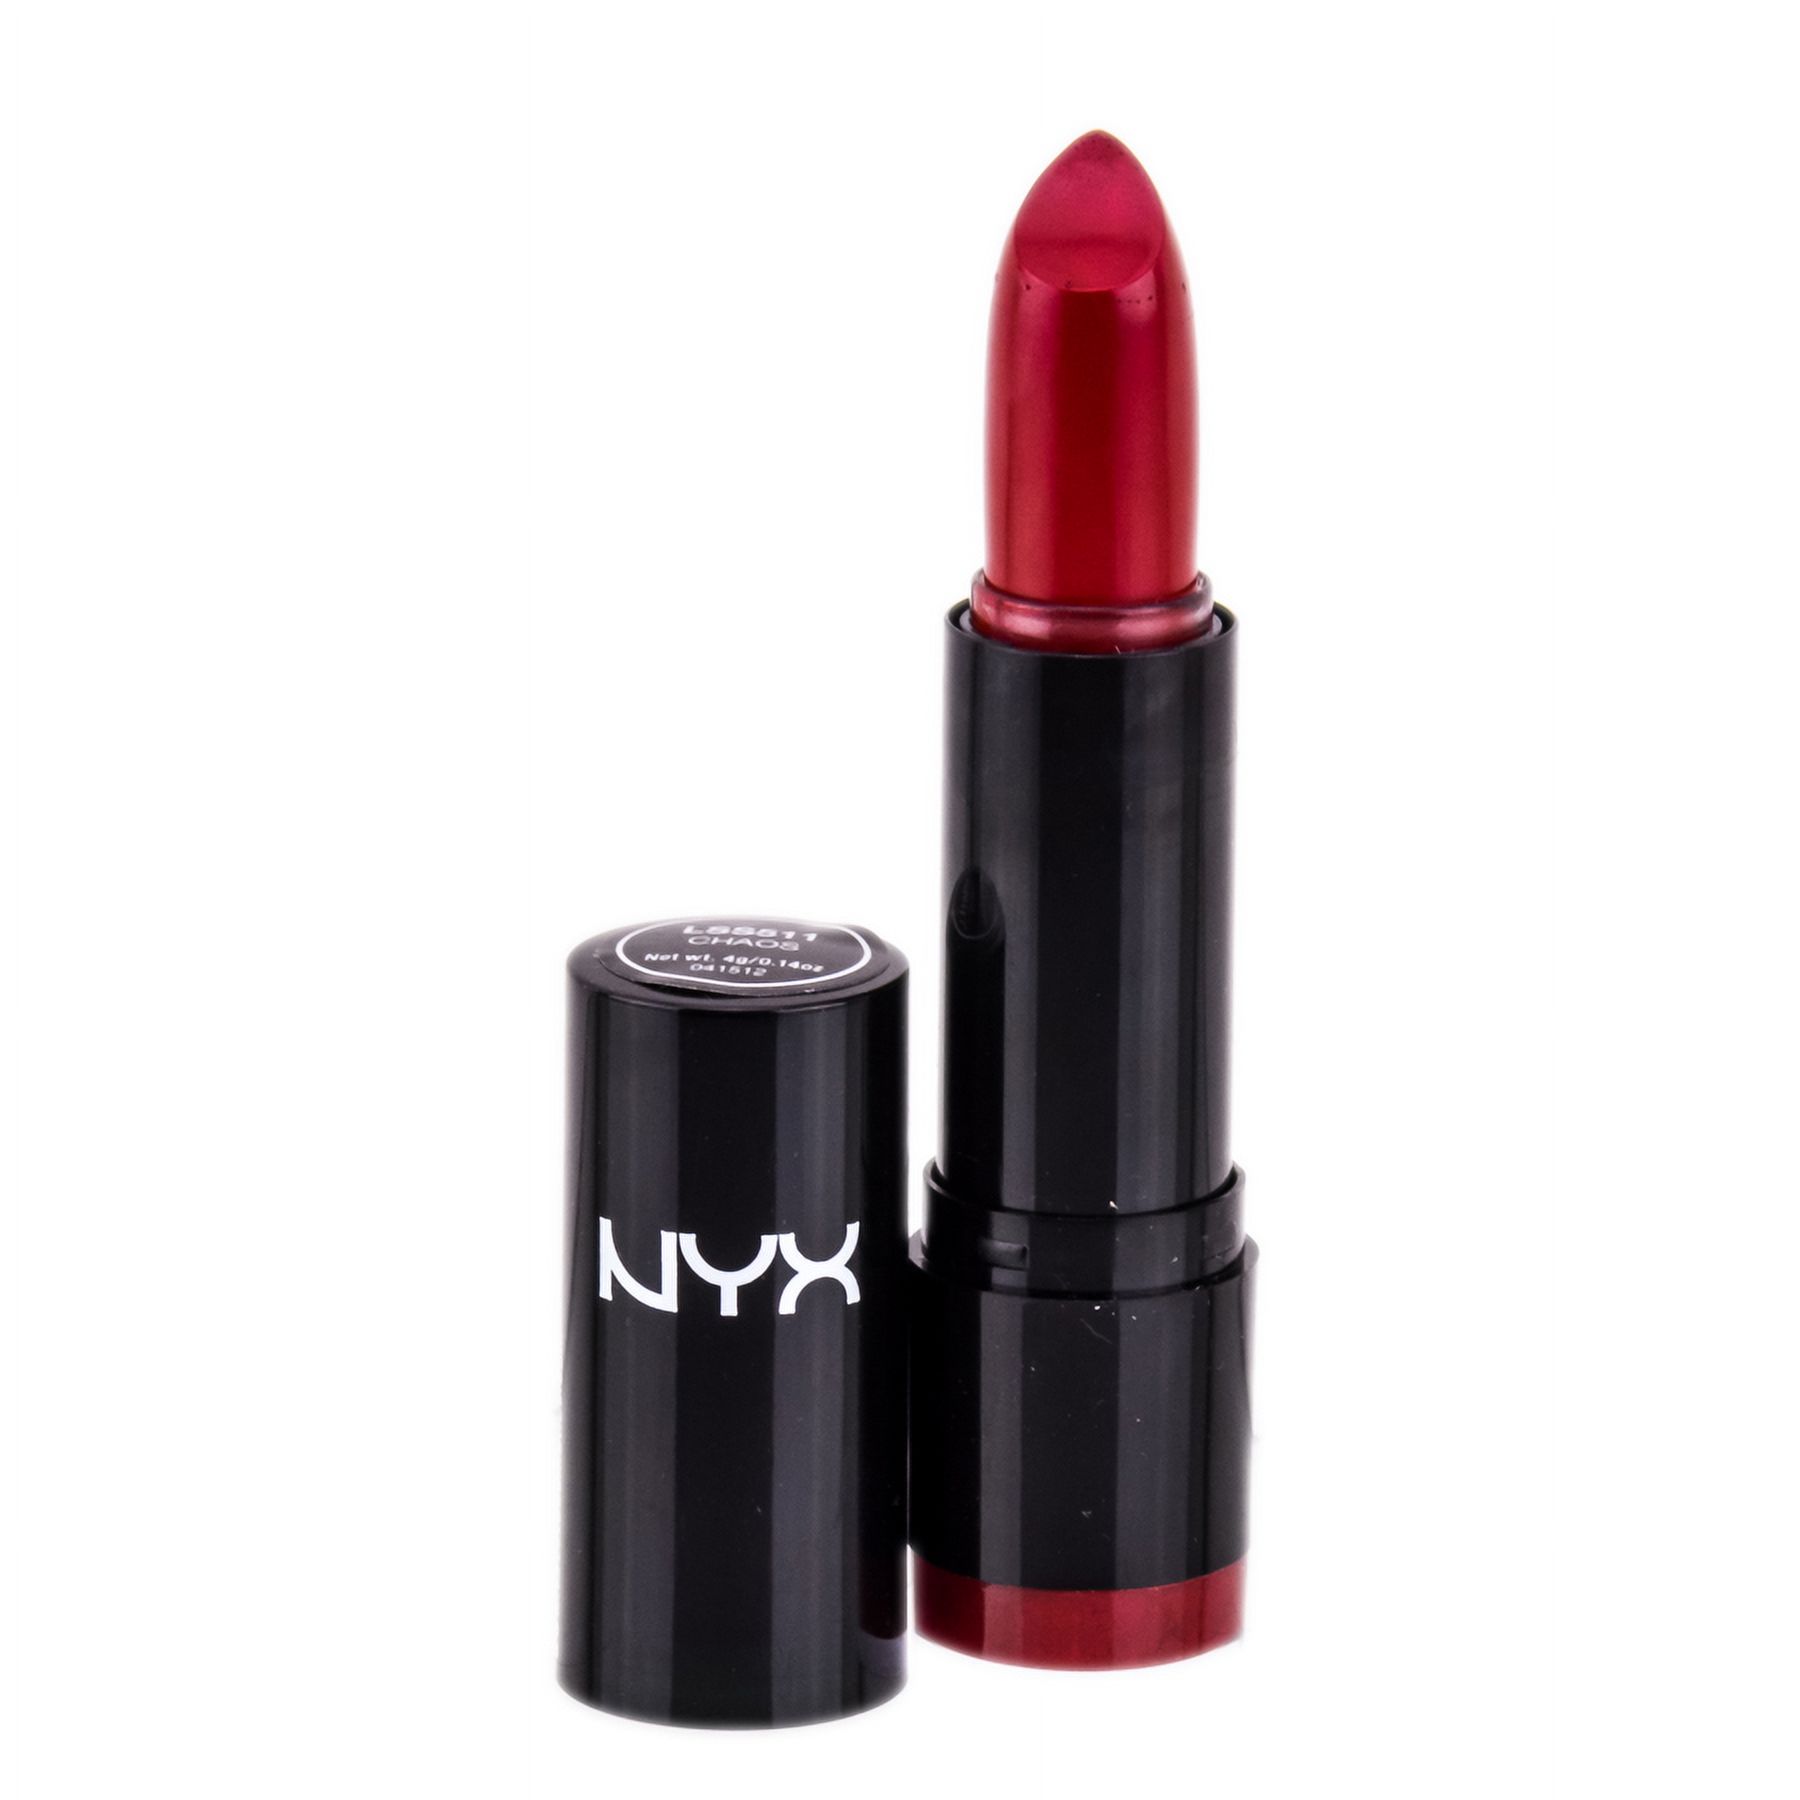 NYX Professional Makeup Extra Creamy Round Lipstick, Chaos - image 1 of 1